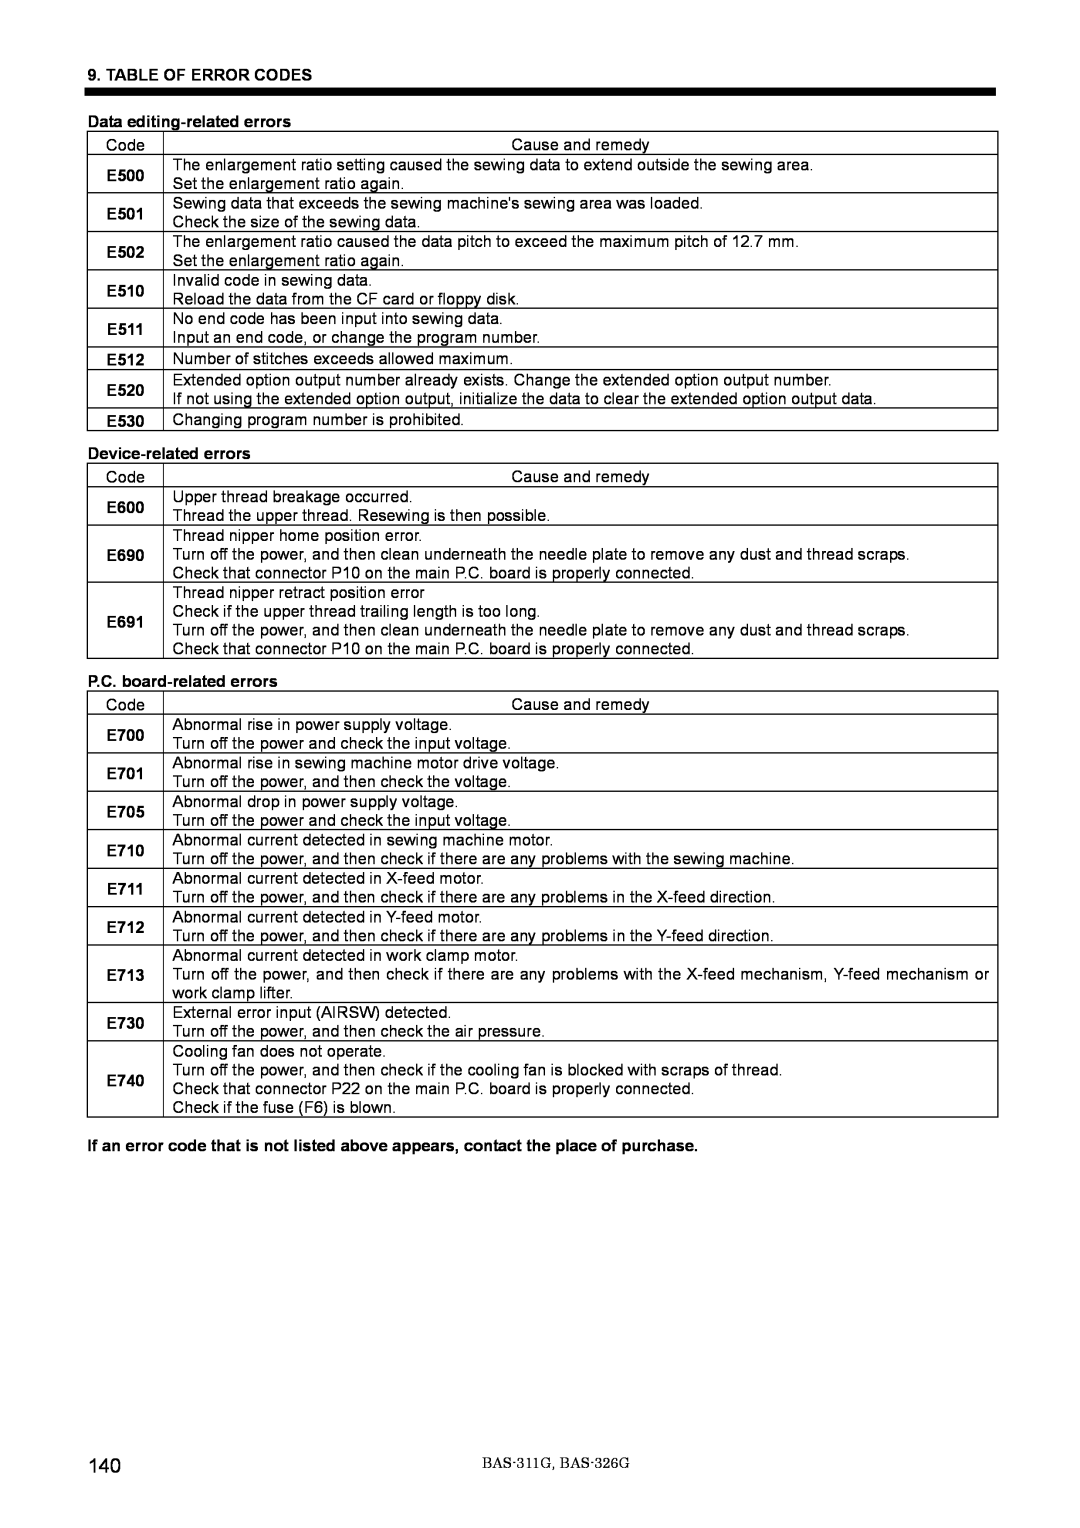 Brother BAS-311G TABLE OF ERROR CODES Data editing-related errors, E500, E501, E502, E510, E511, E512, E520, E530, E600 